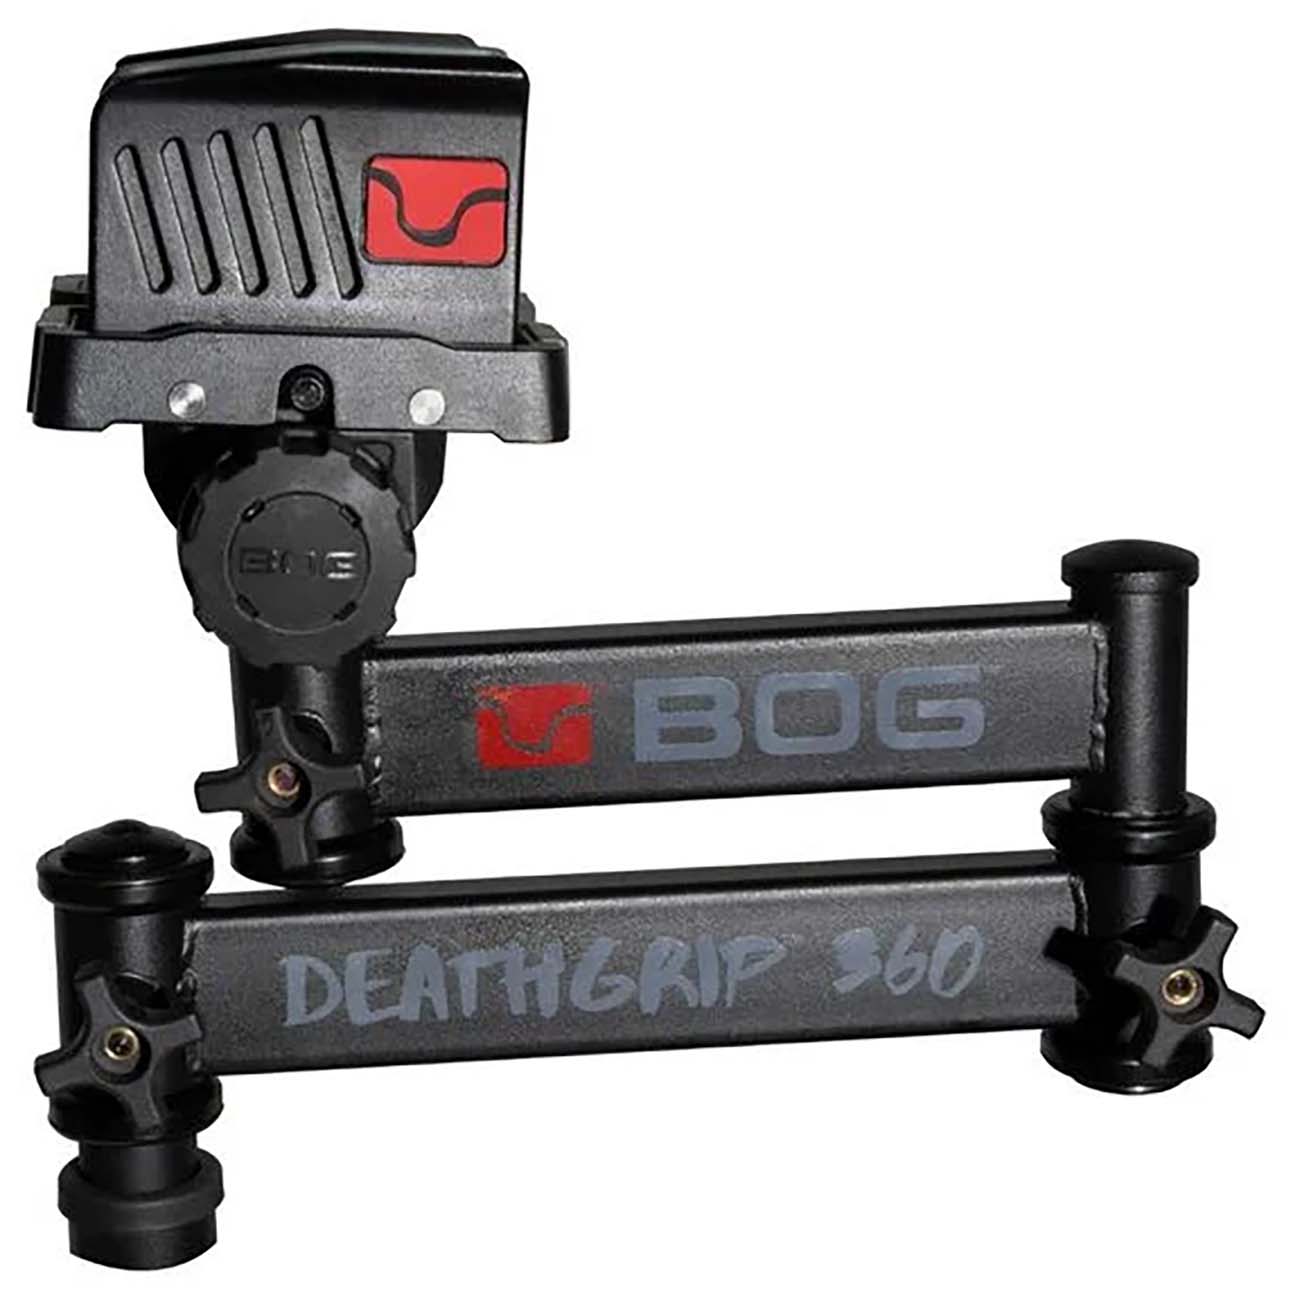 Bog Deathgrip 360 Chair